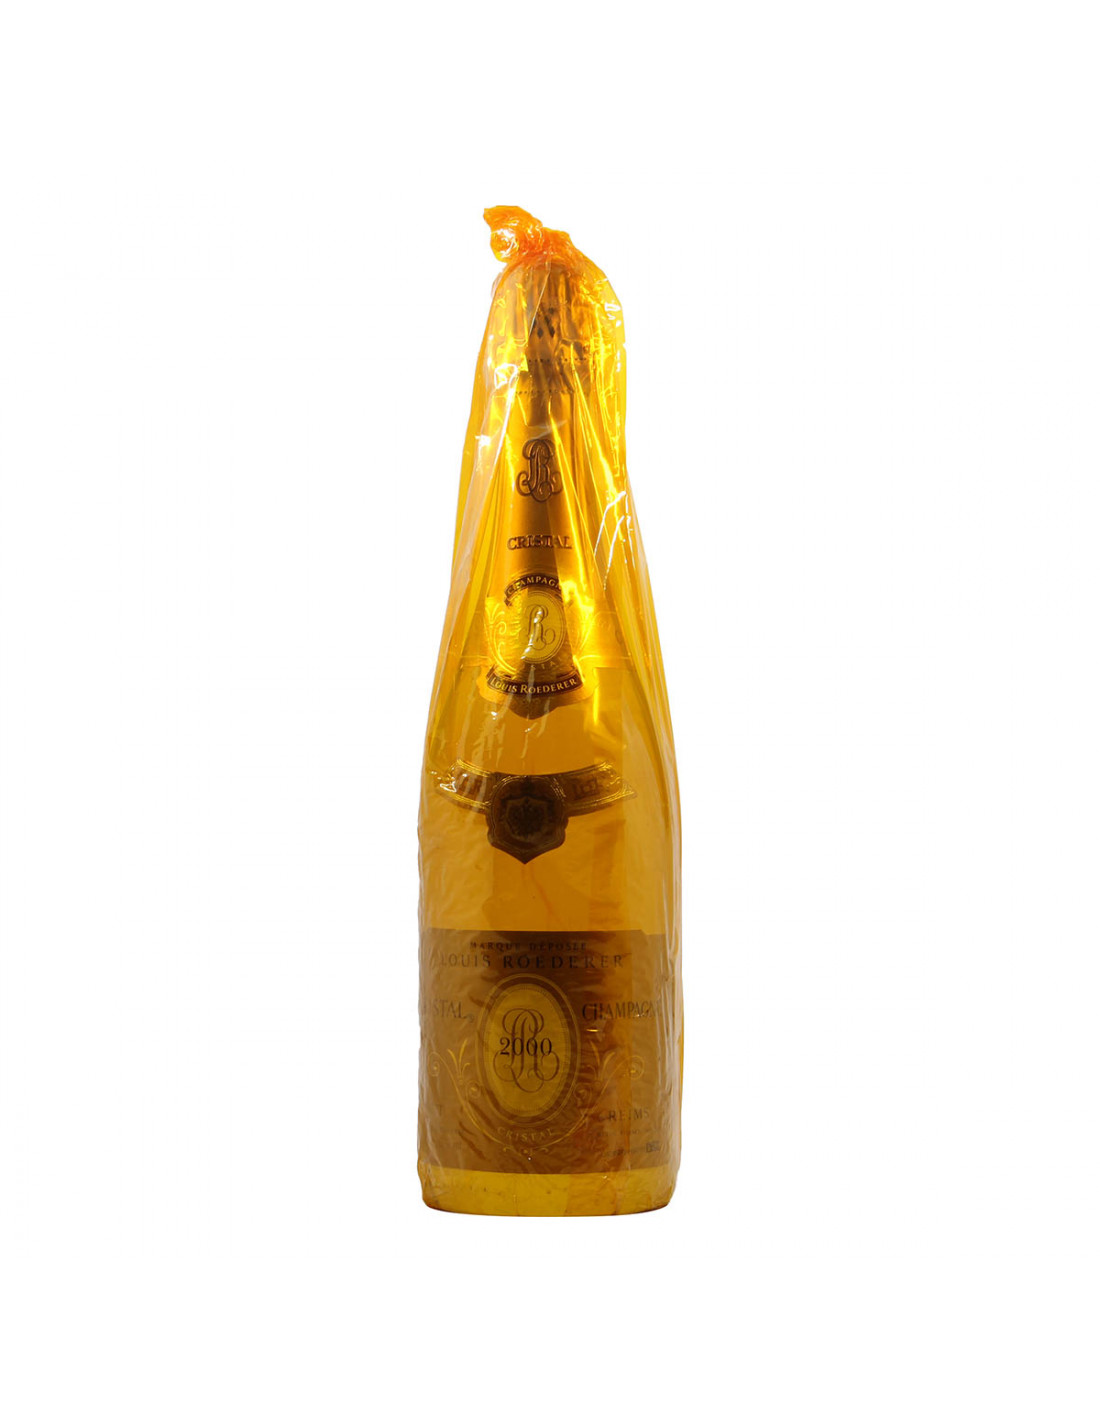 Roederer Cristal 2000 Grandi Bottiglie